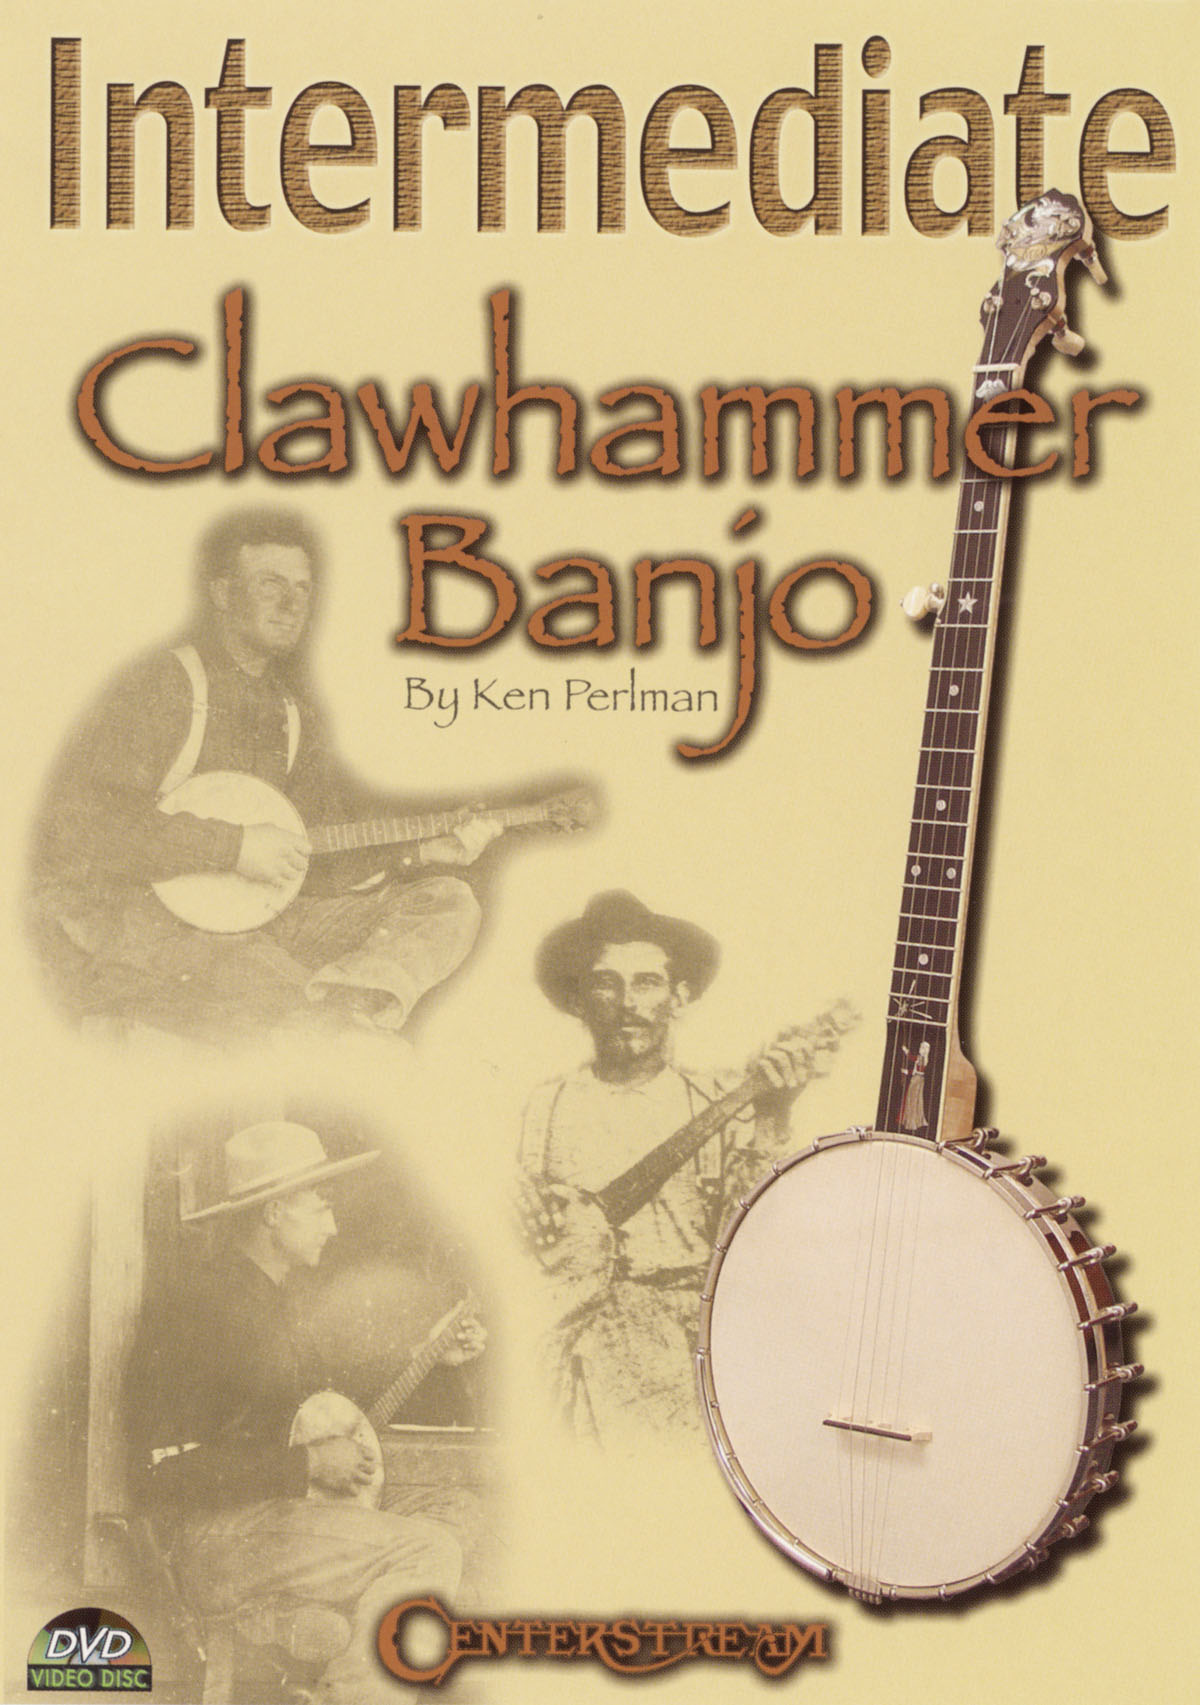 Intermediate Clawhammer Banjo - DVD - noty pro banjo